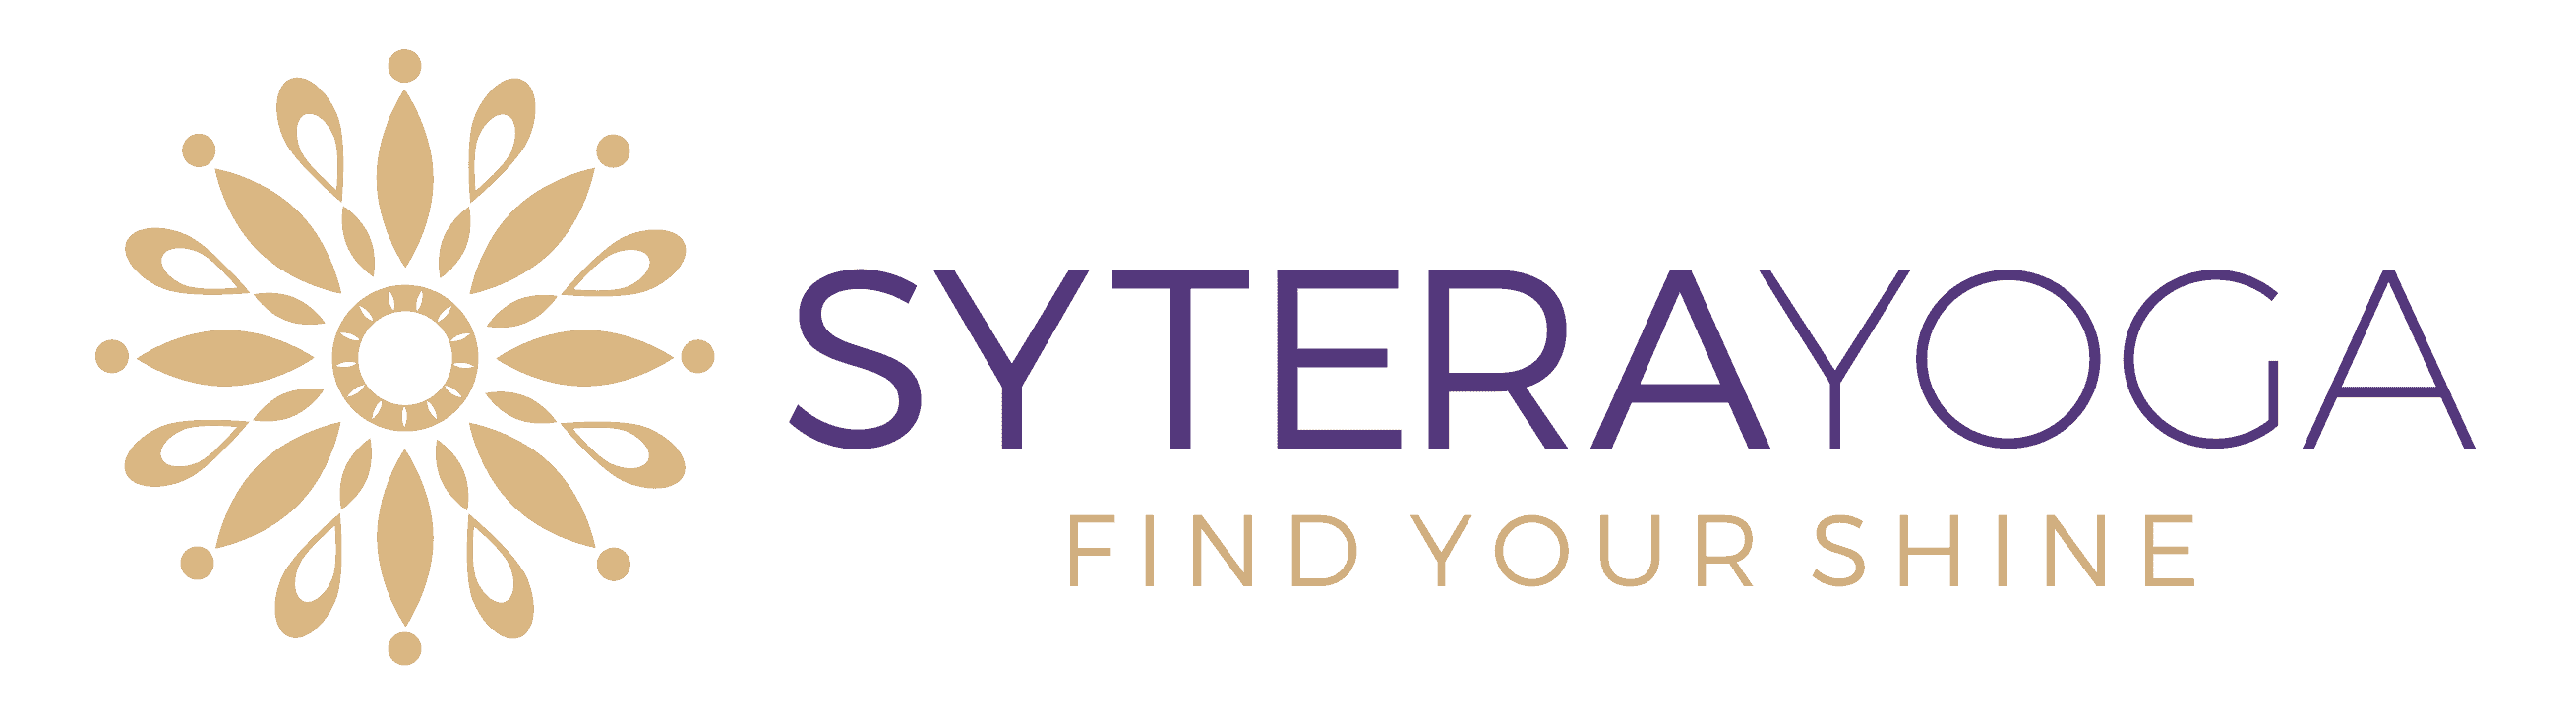 SyteraYoga - Find Your Shine